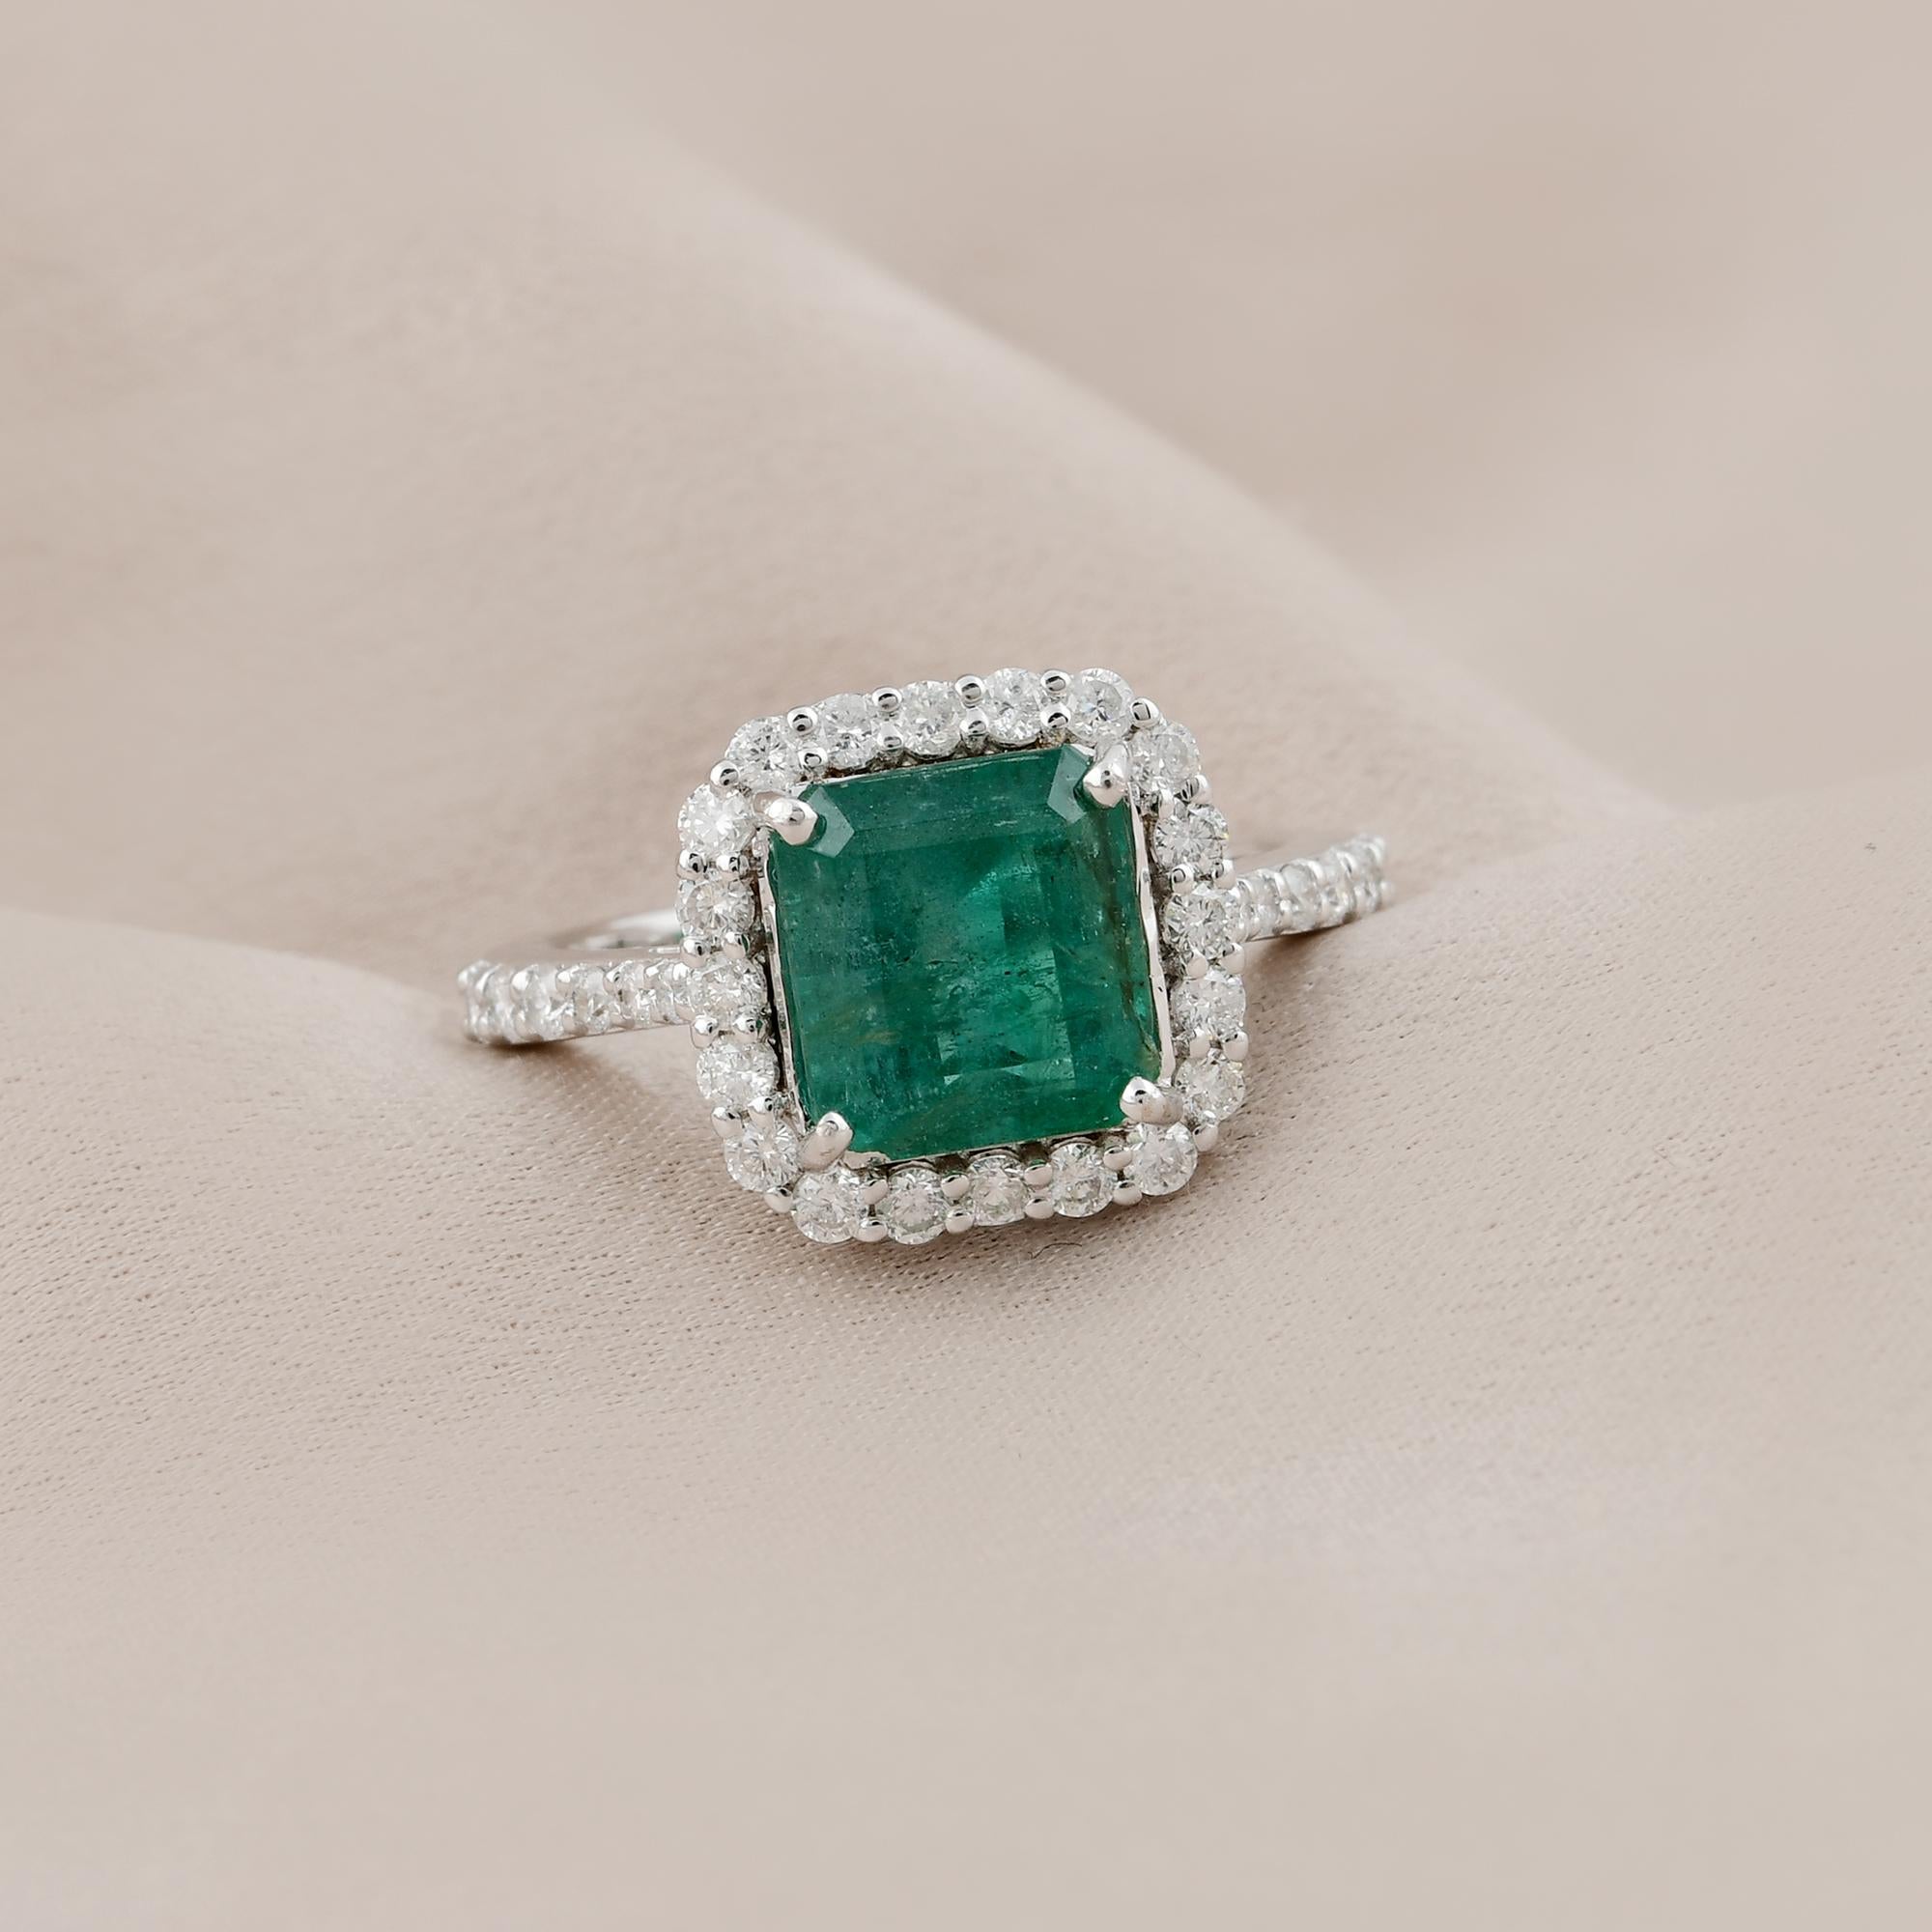 Emerald Cut Zambian Emerald Gemstone Cocktail Ring Diamond 18 Kt White Gold Handmade Jewelry For Sale